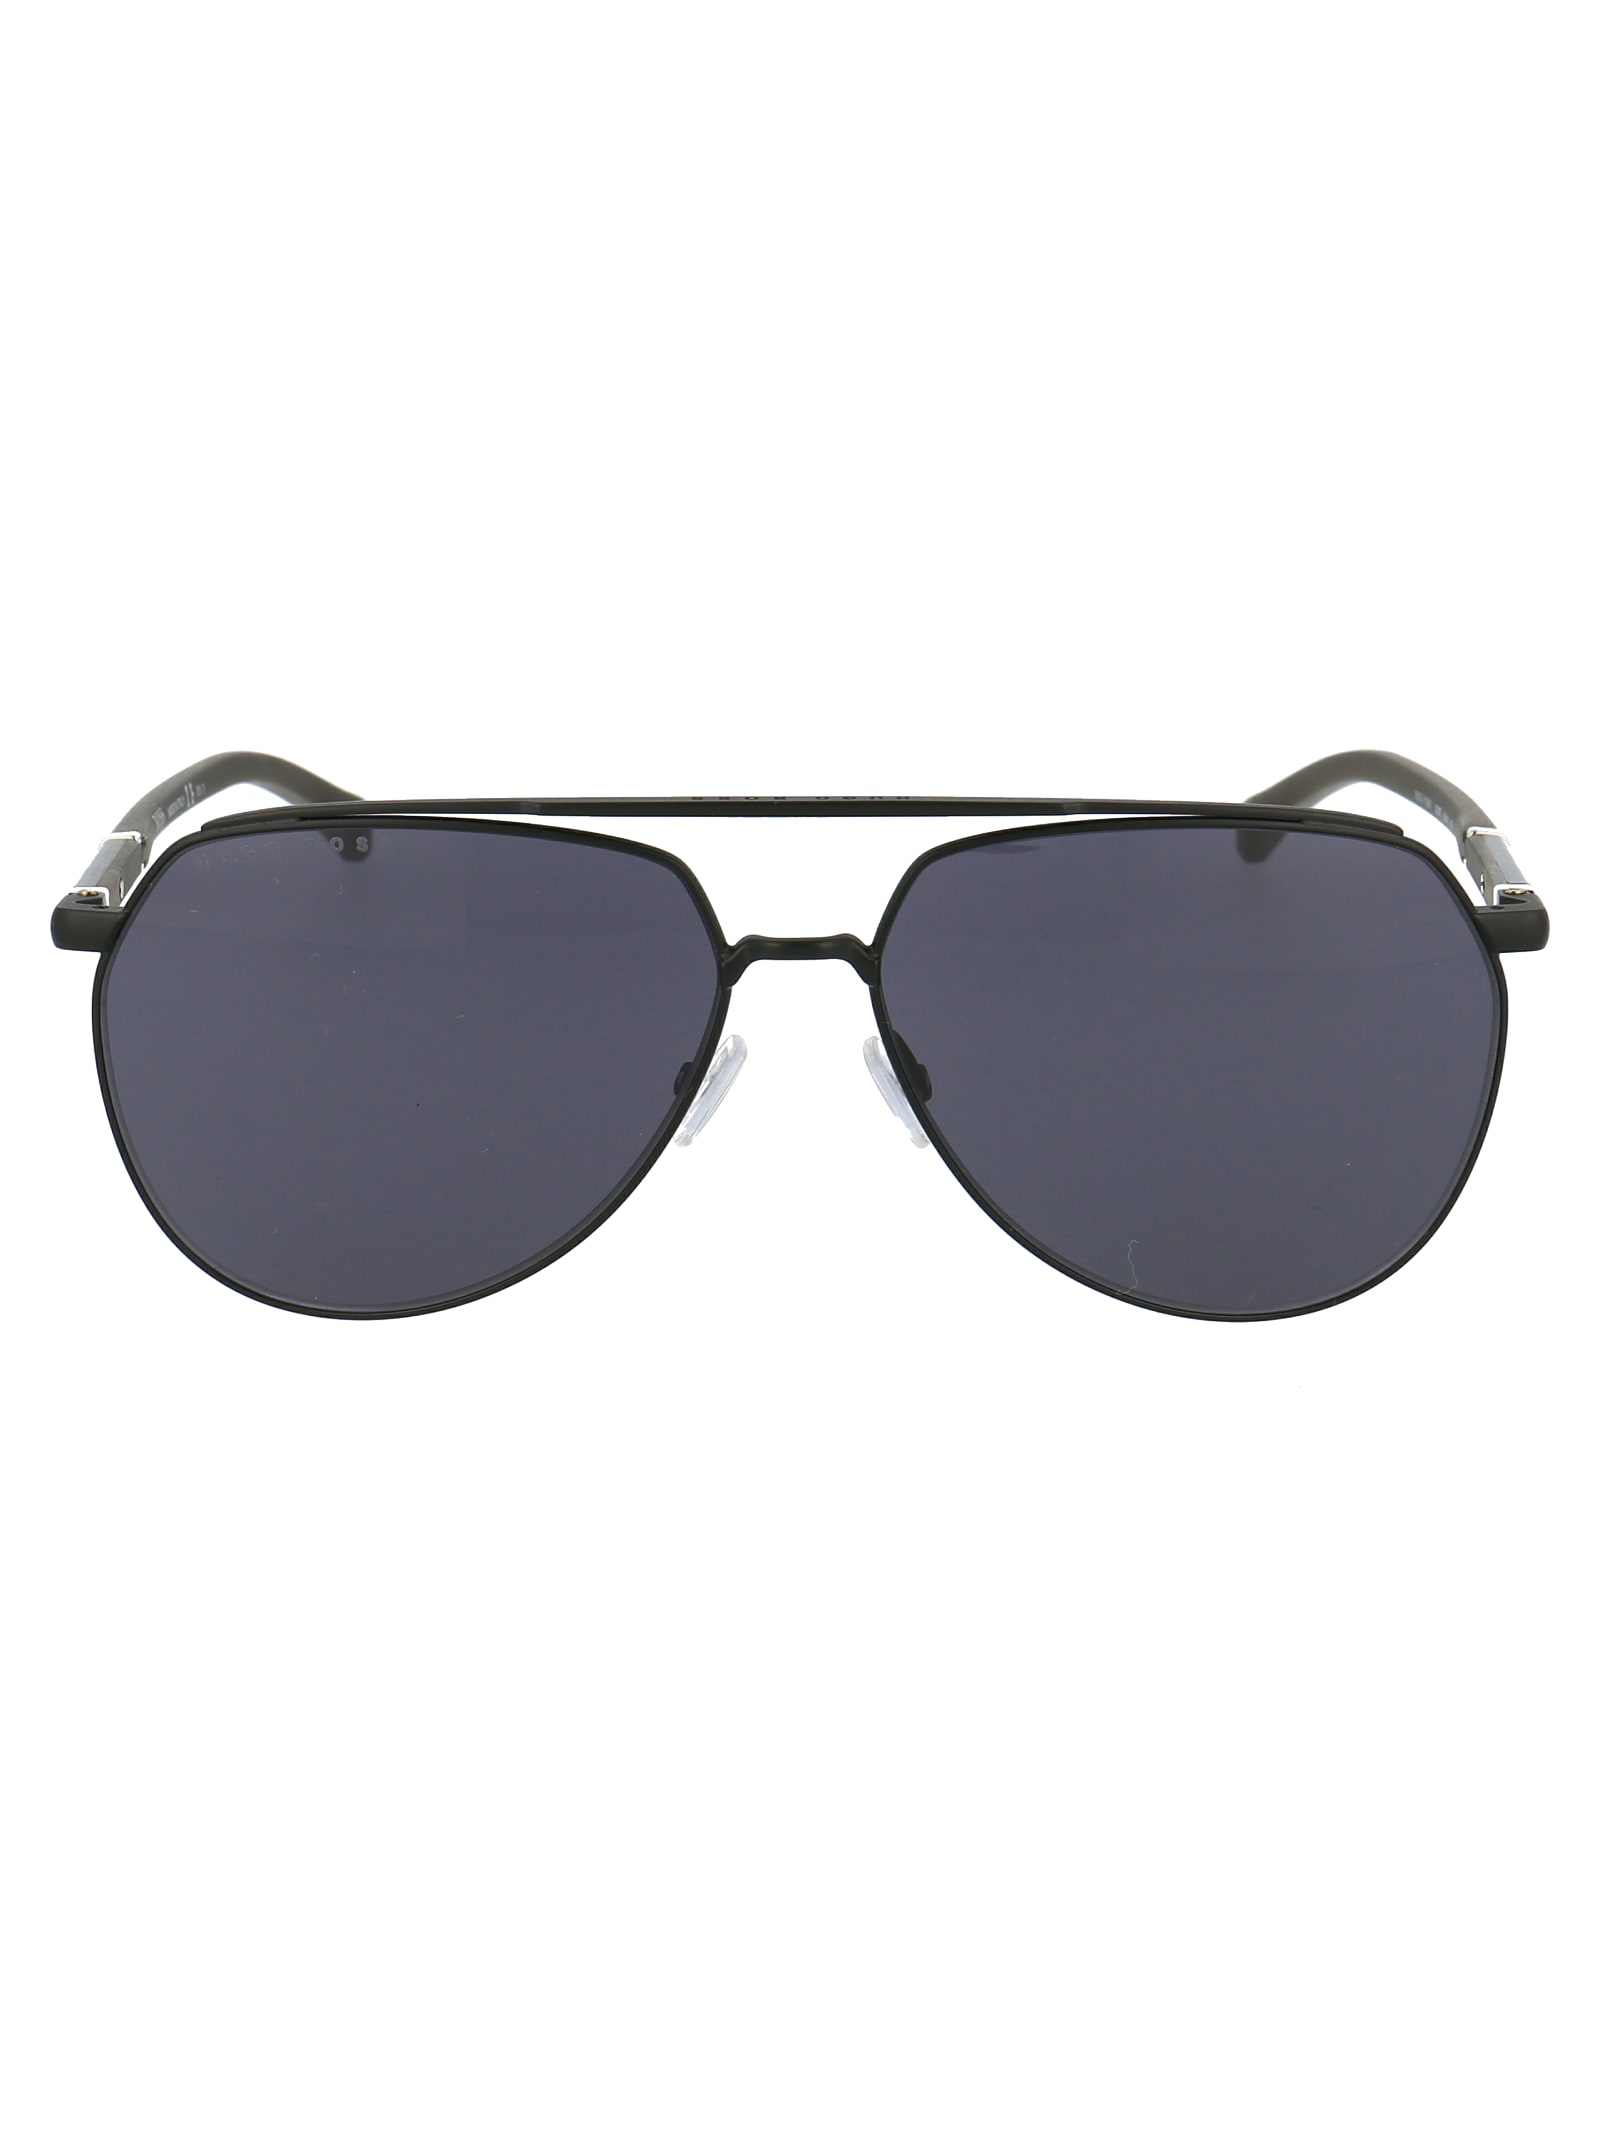 Hugo Boss Boss 1130/s Sunglasses